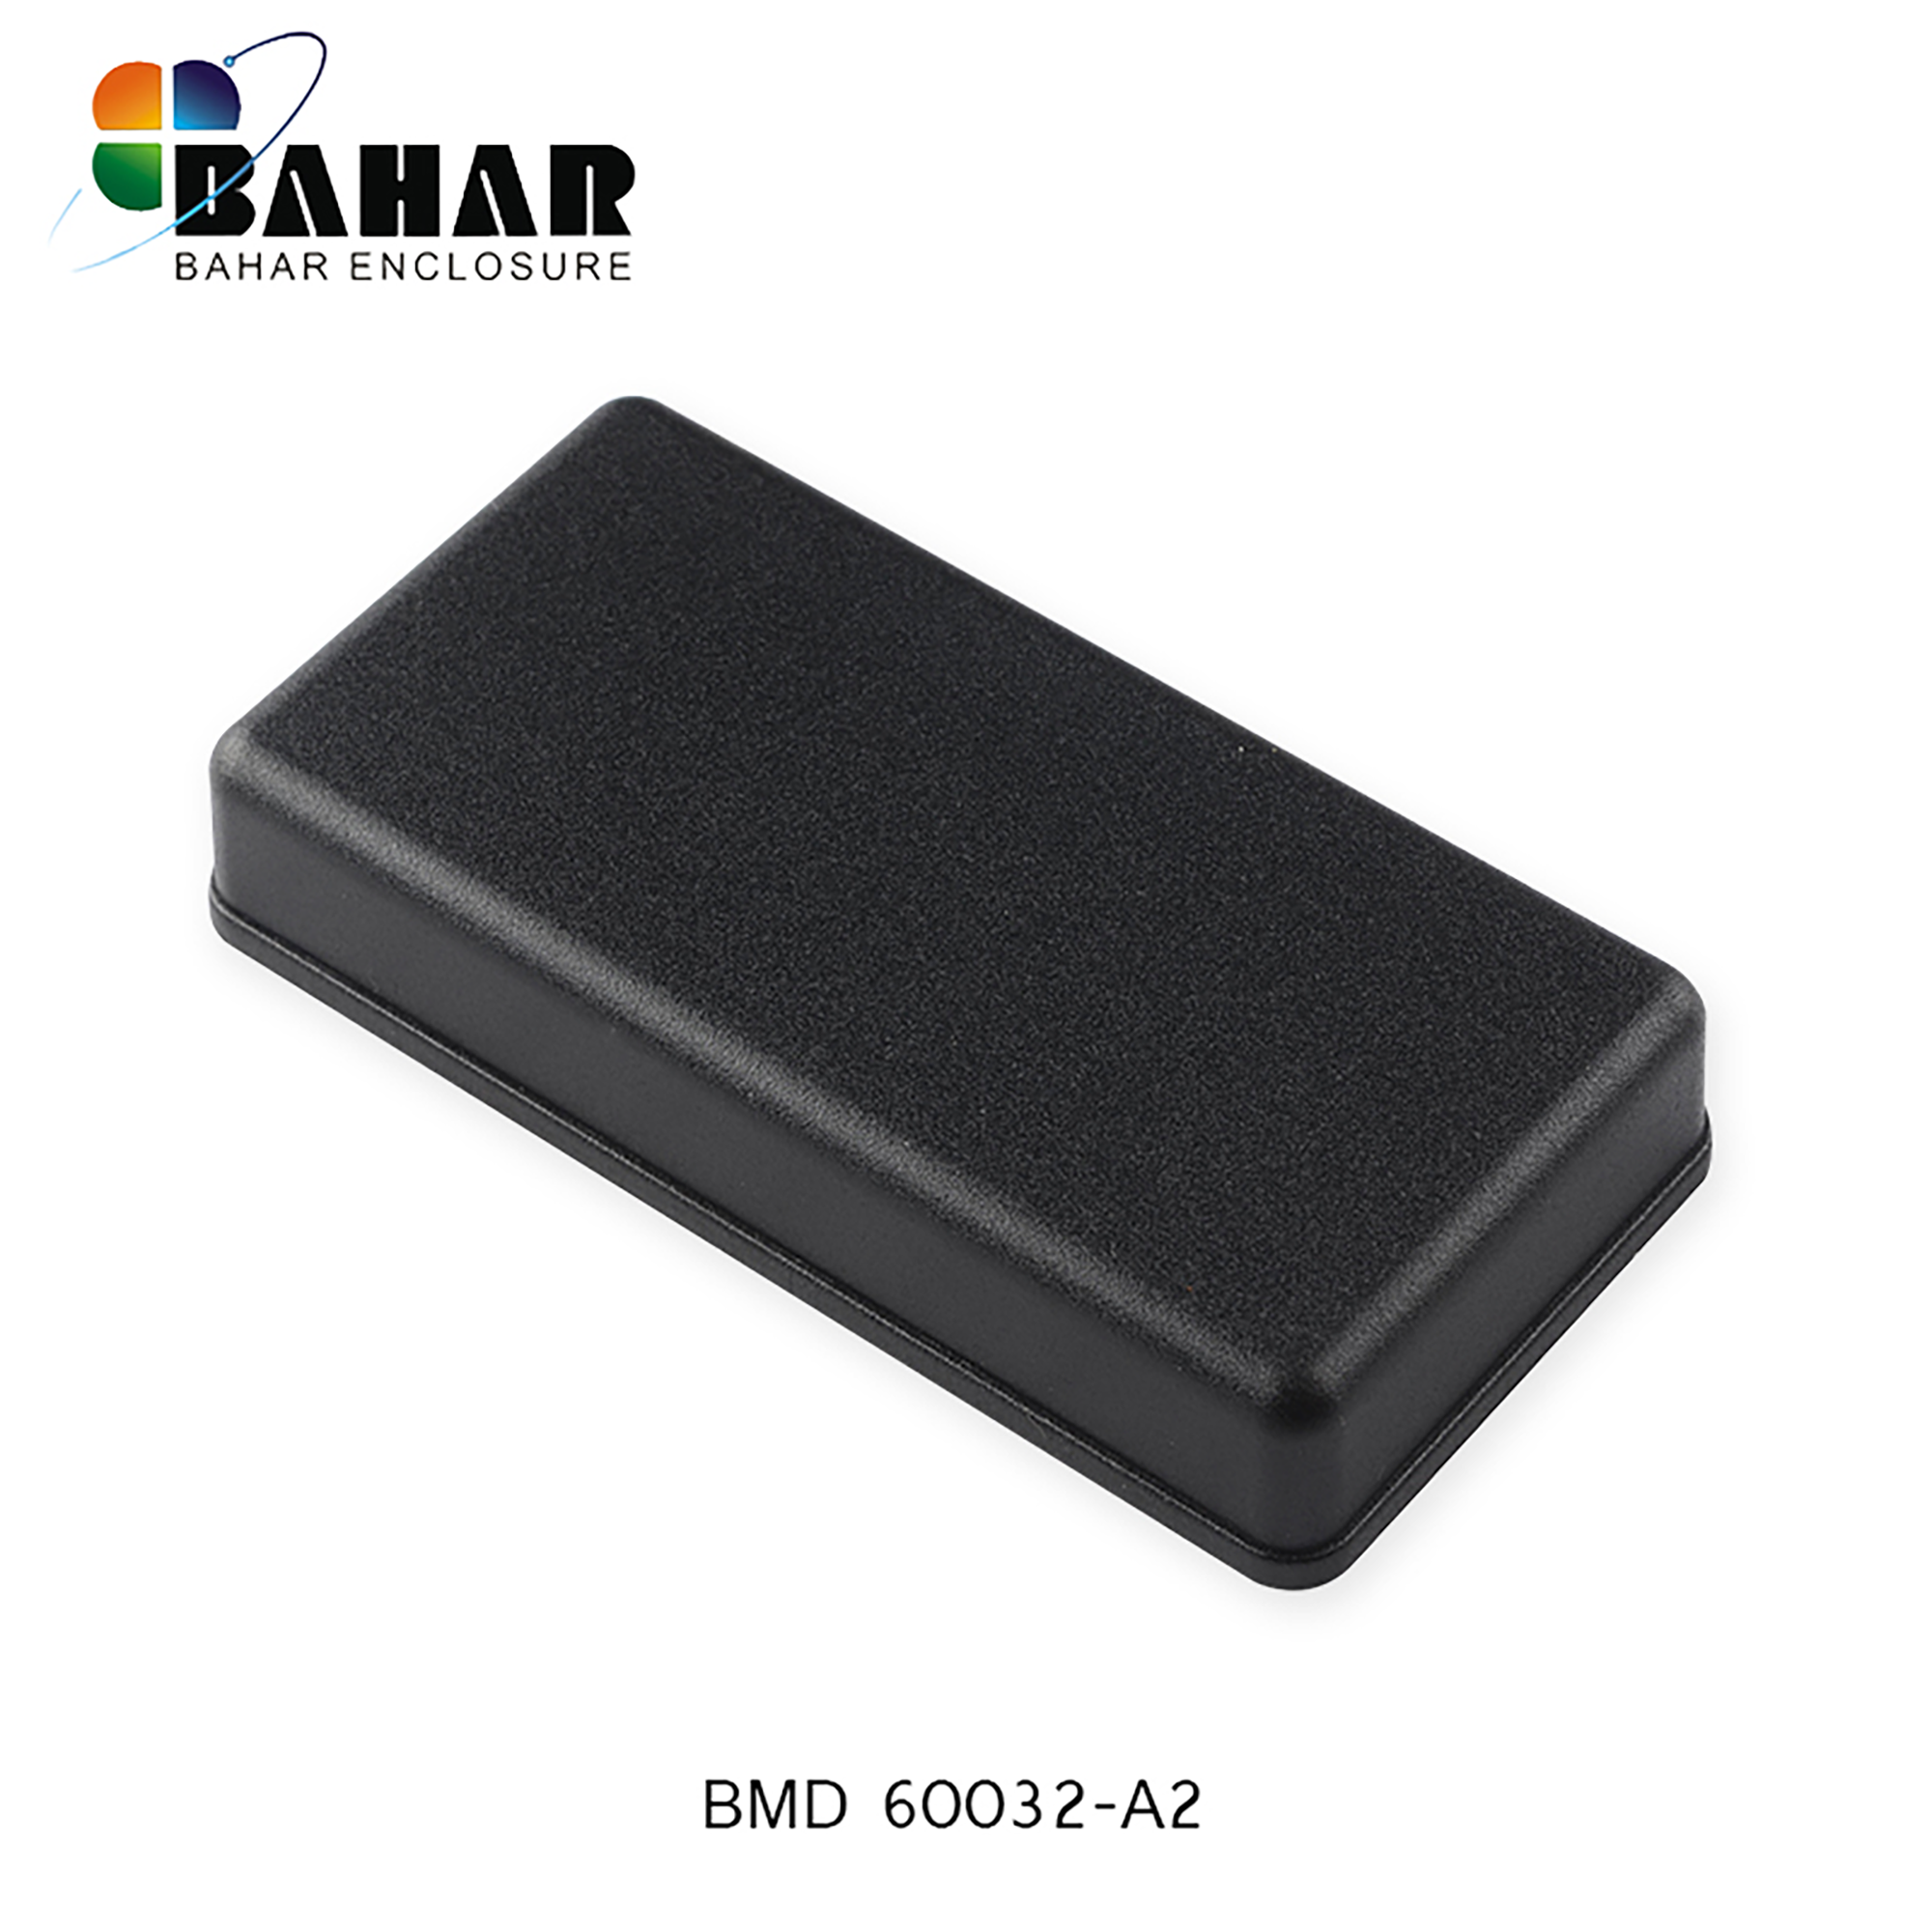 BMD 60032 | 81 x 41 x 15 mm